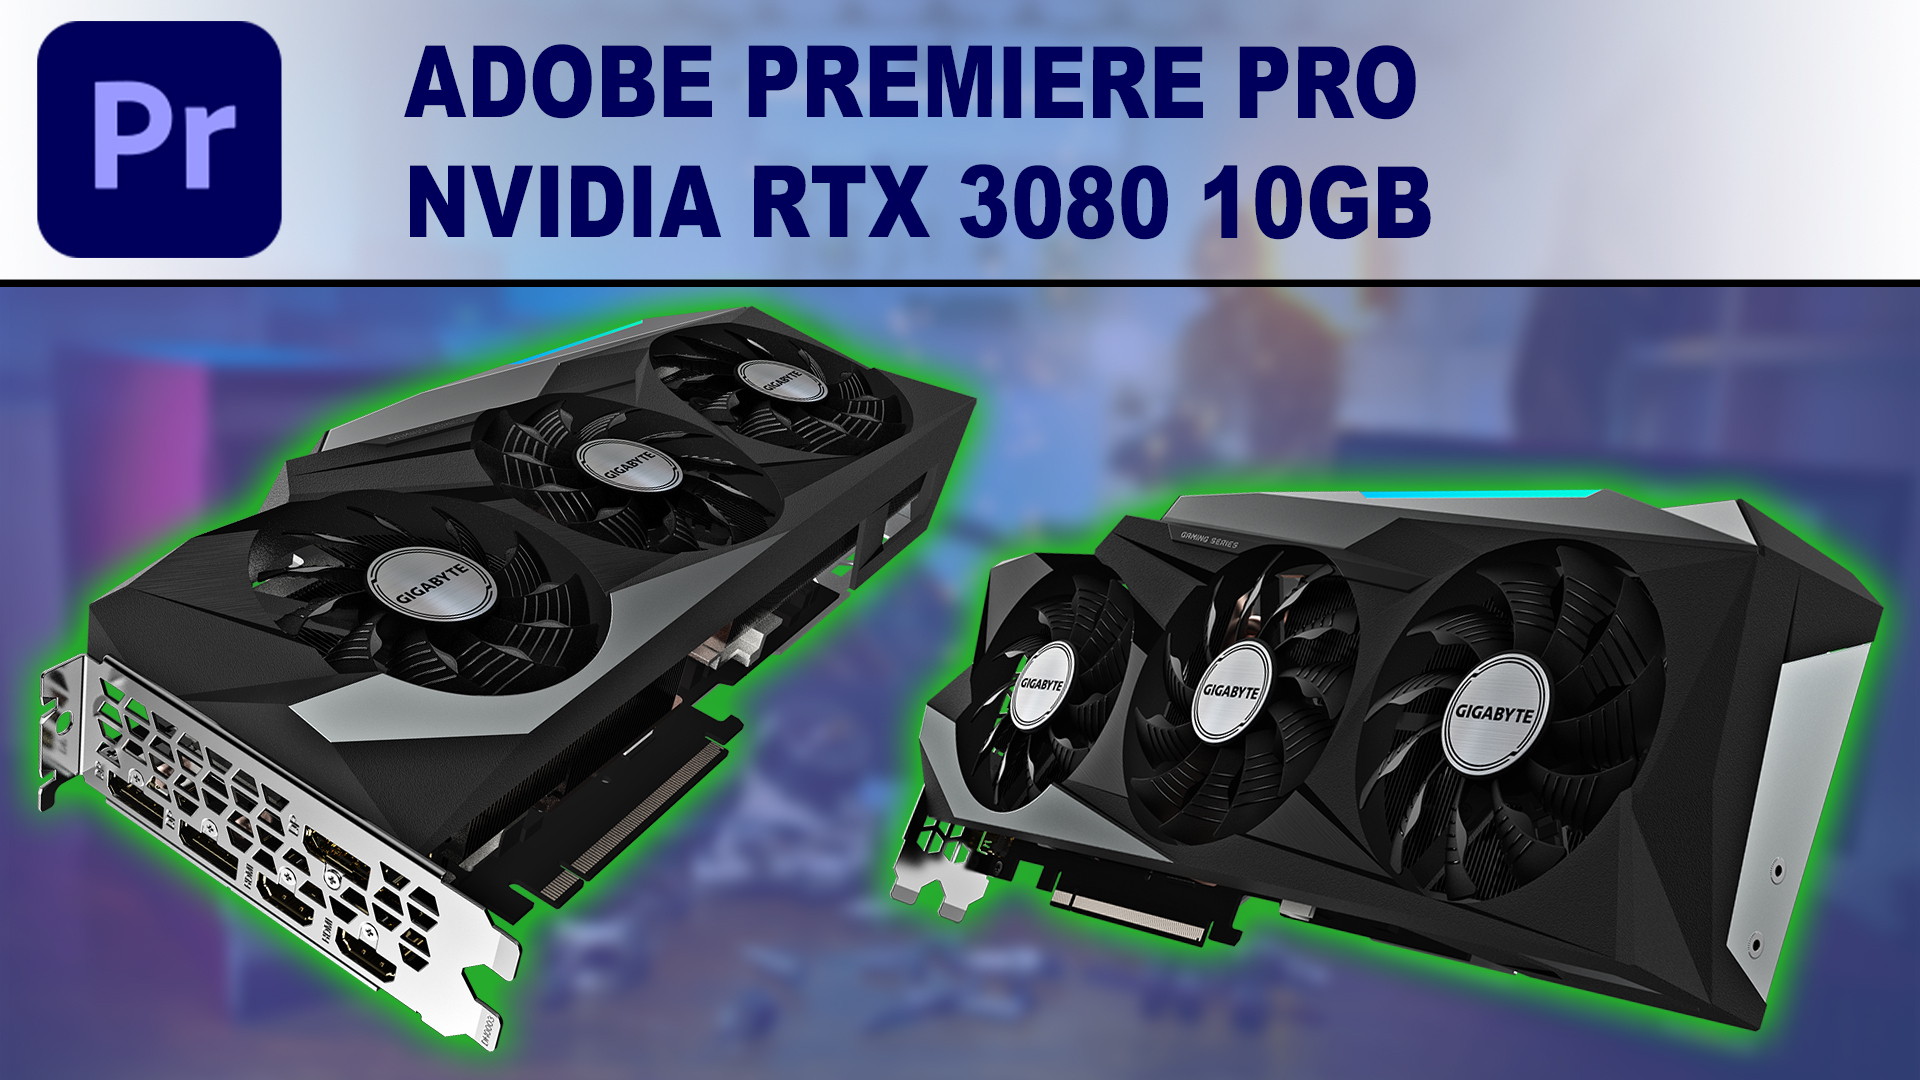 Adobe Premiere Pro - NVIDIA GeForce RTX 3080 Performance